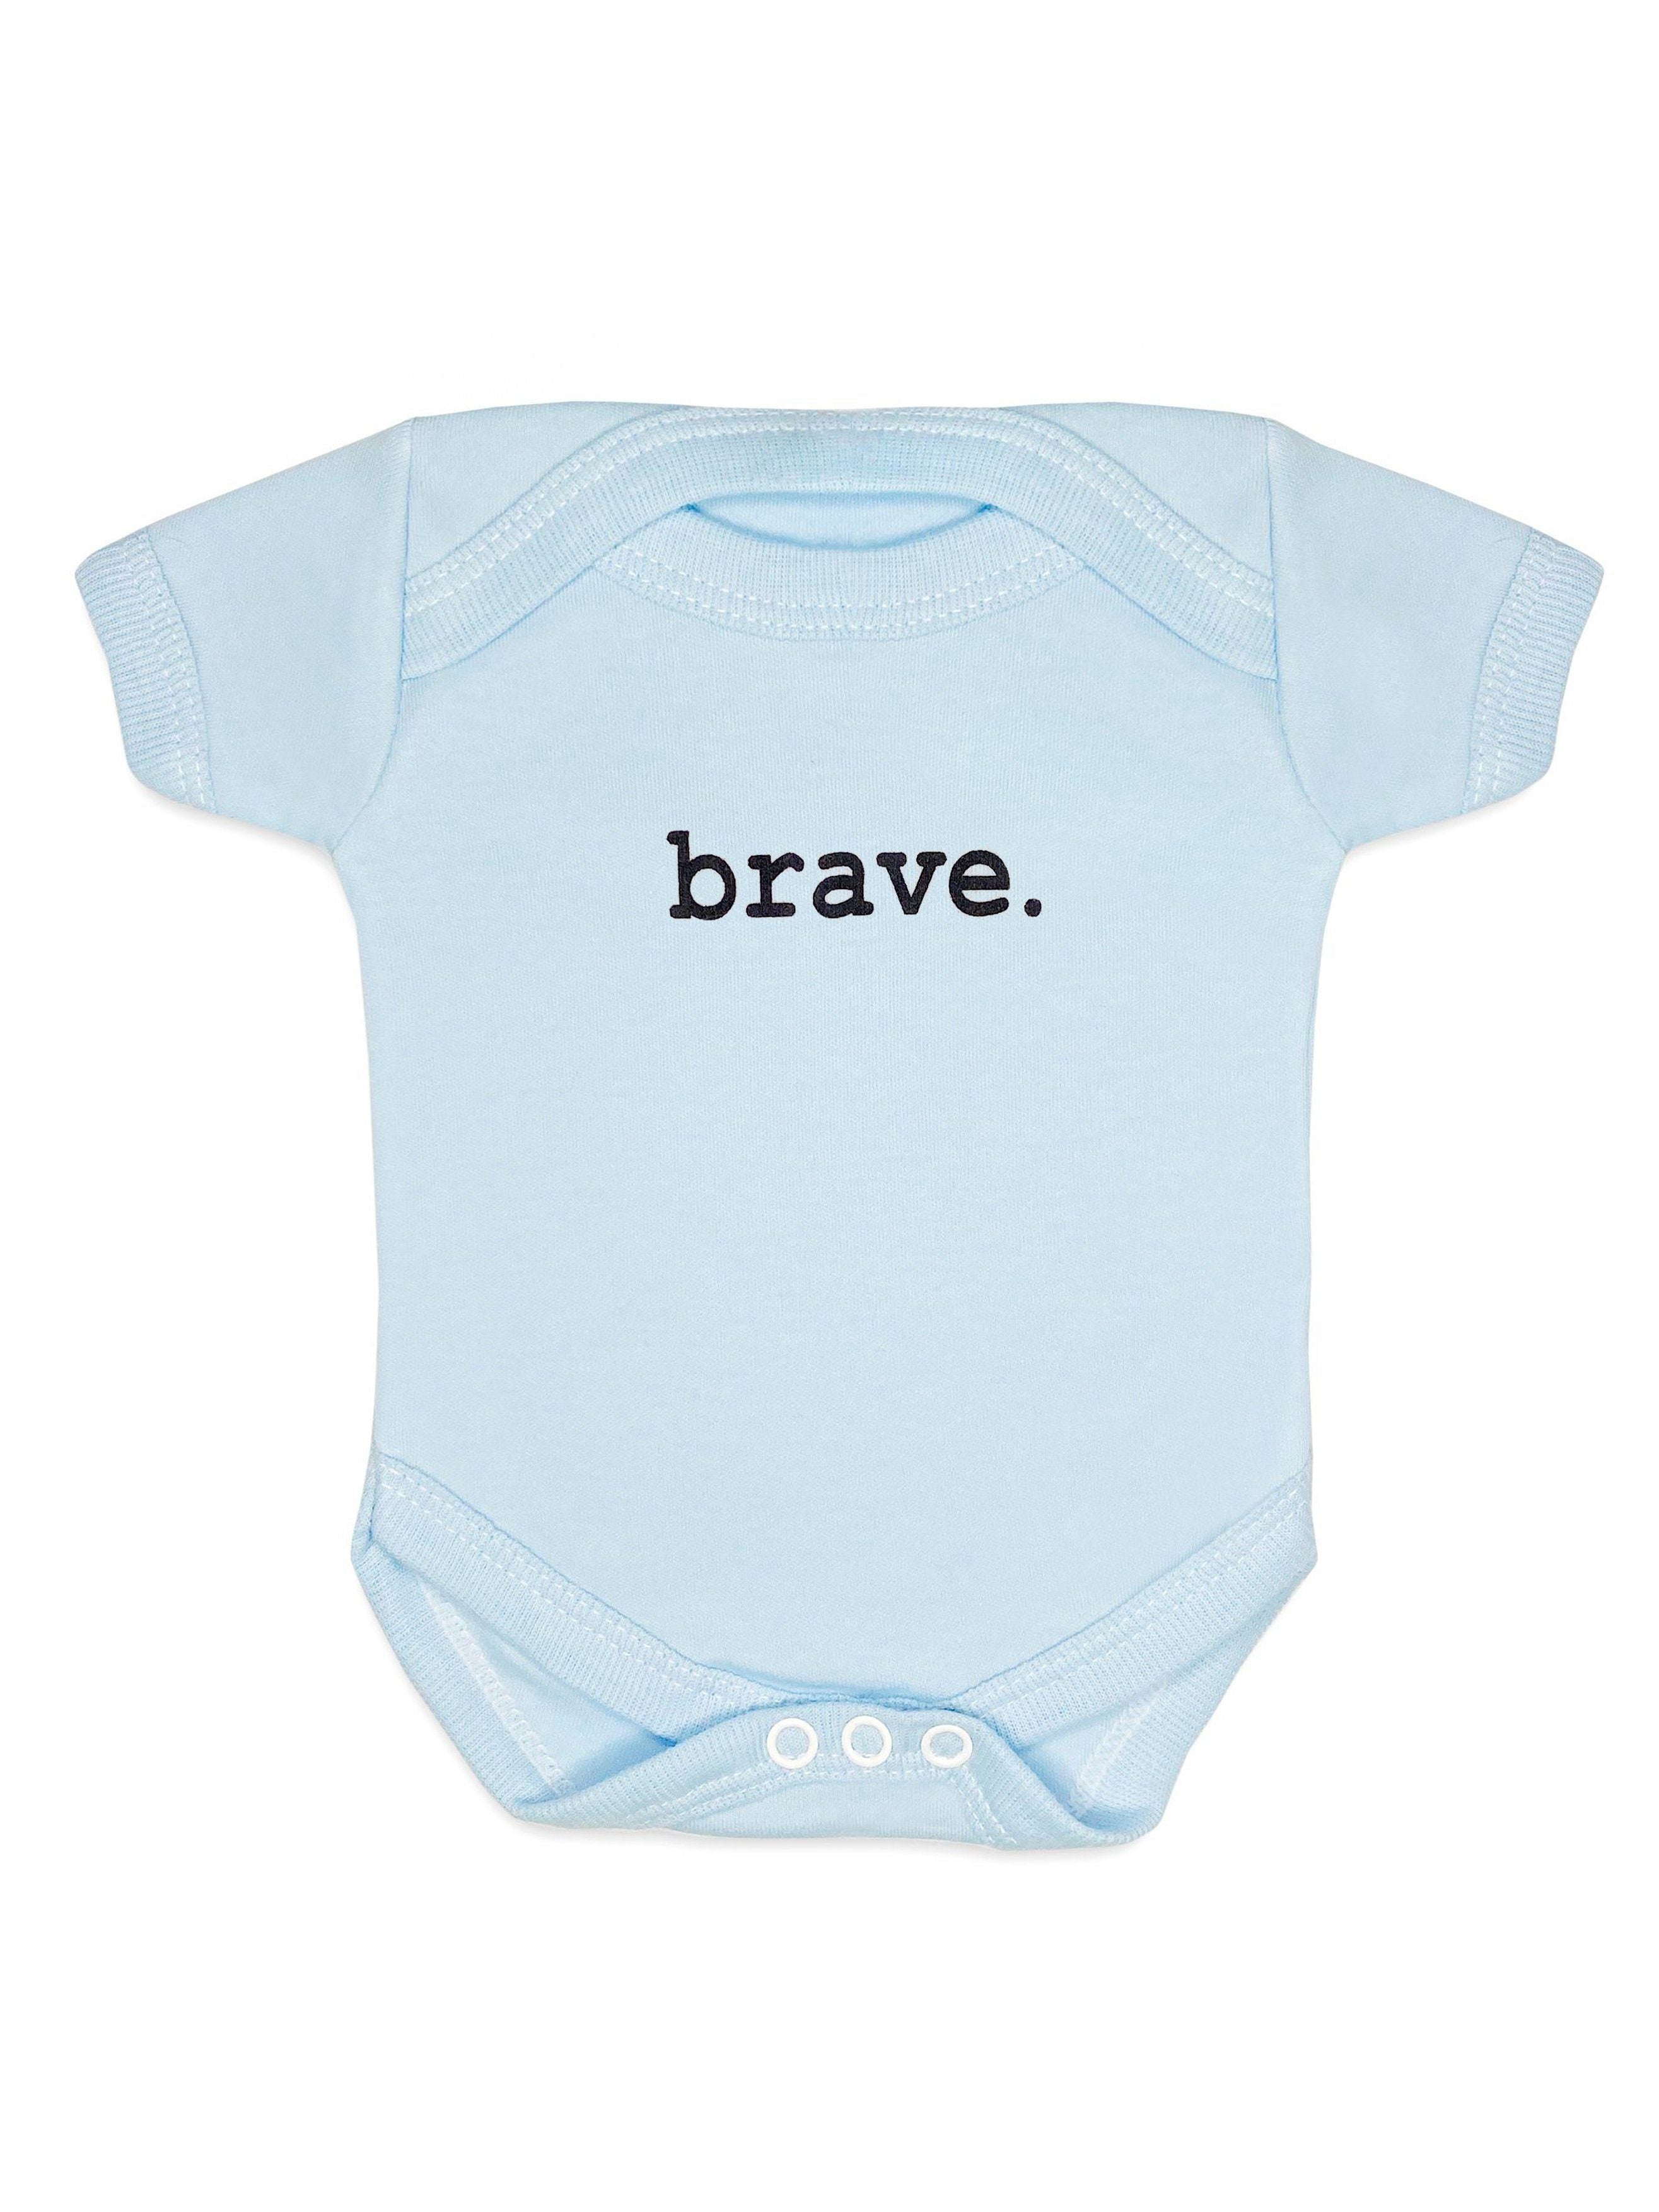 "Brave" Bodysuit - Blue Bodysuit / Vest Little Mouse Baby Clothing & Gifts 